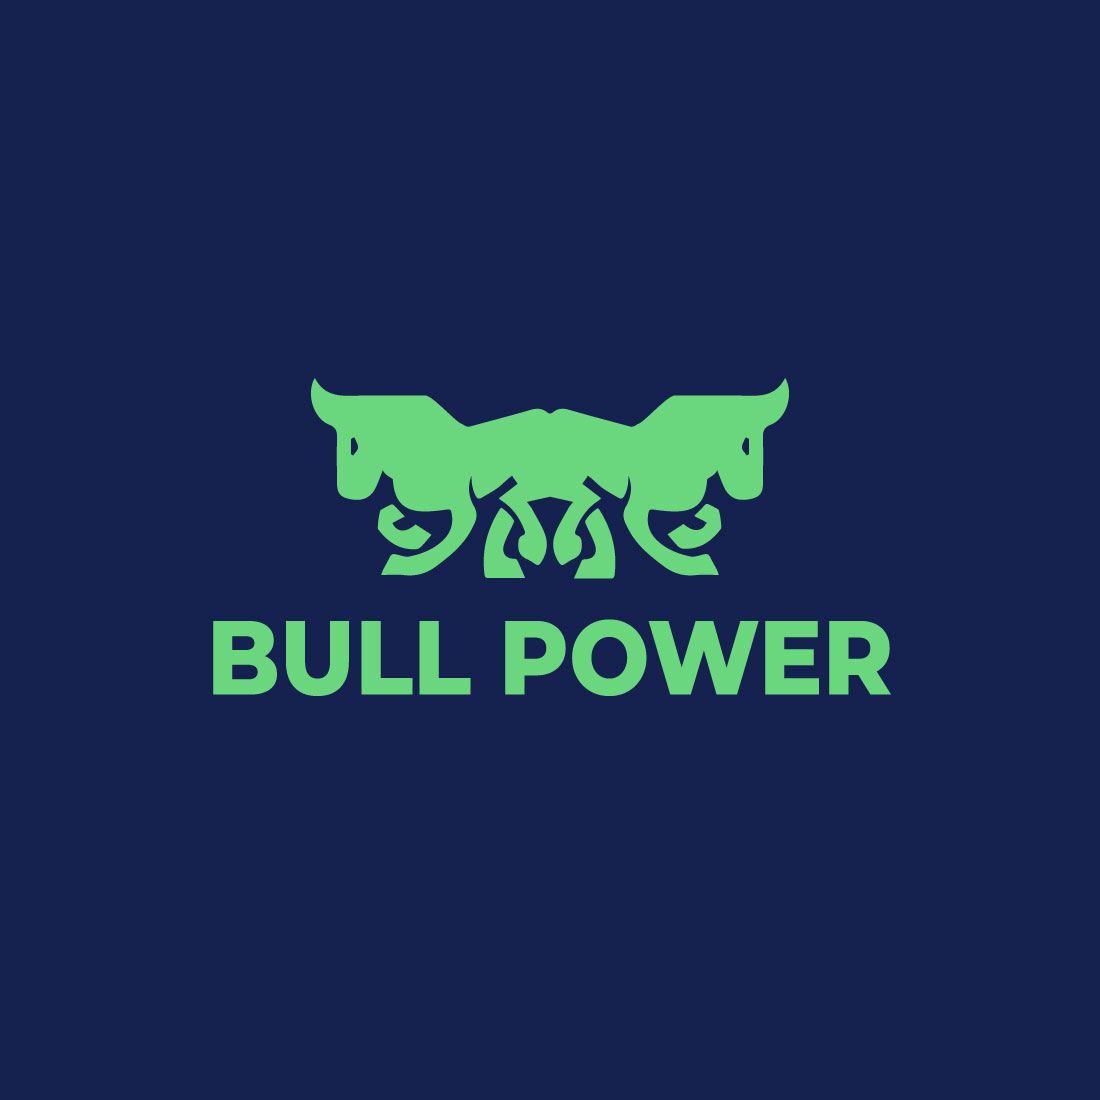 Bull Logo Template cover image.